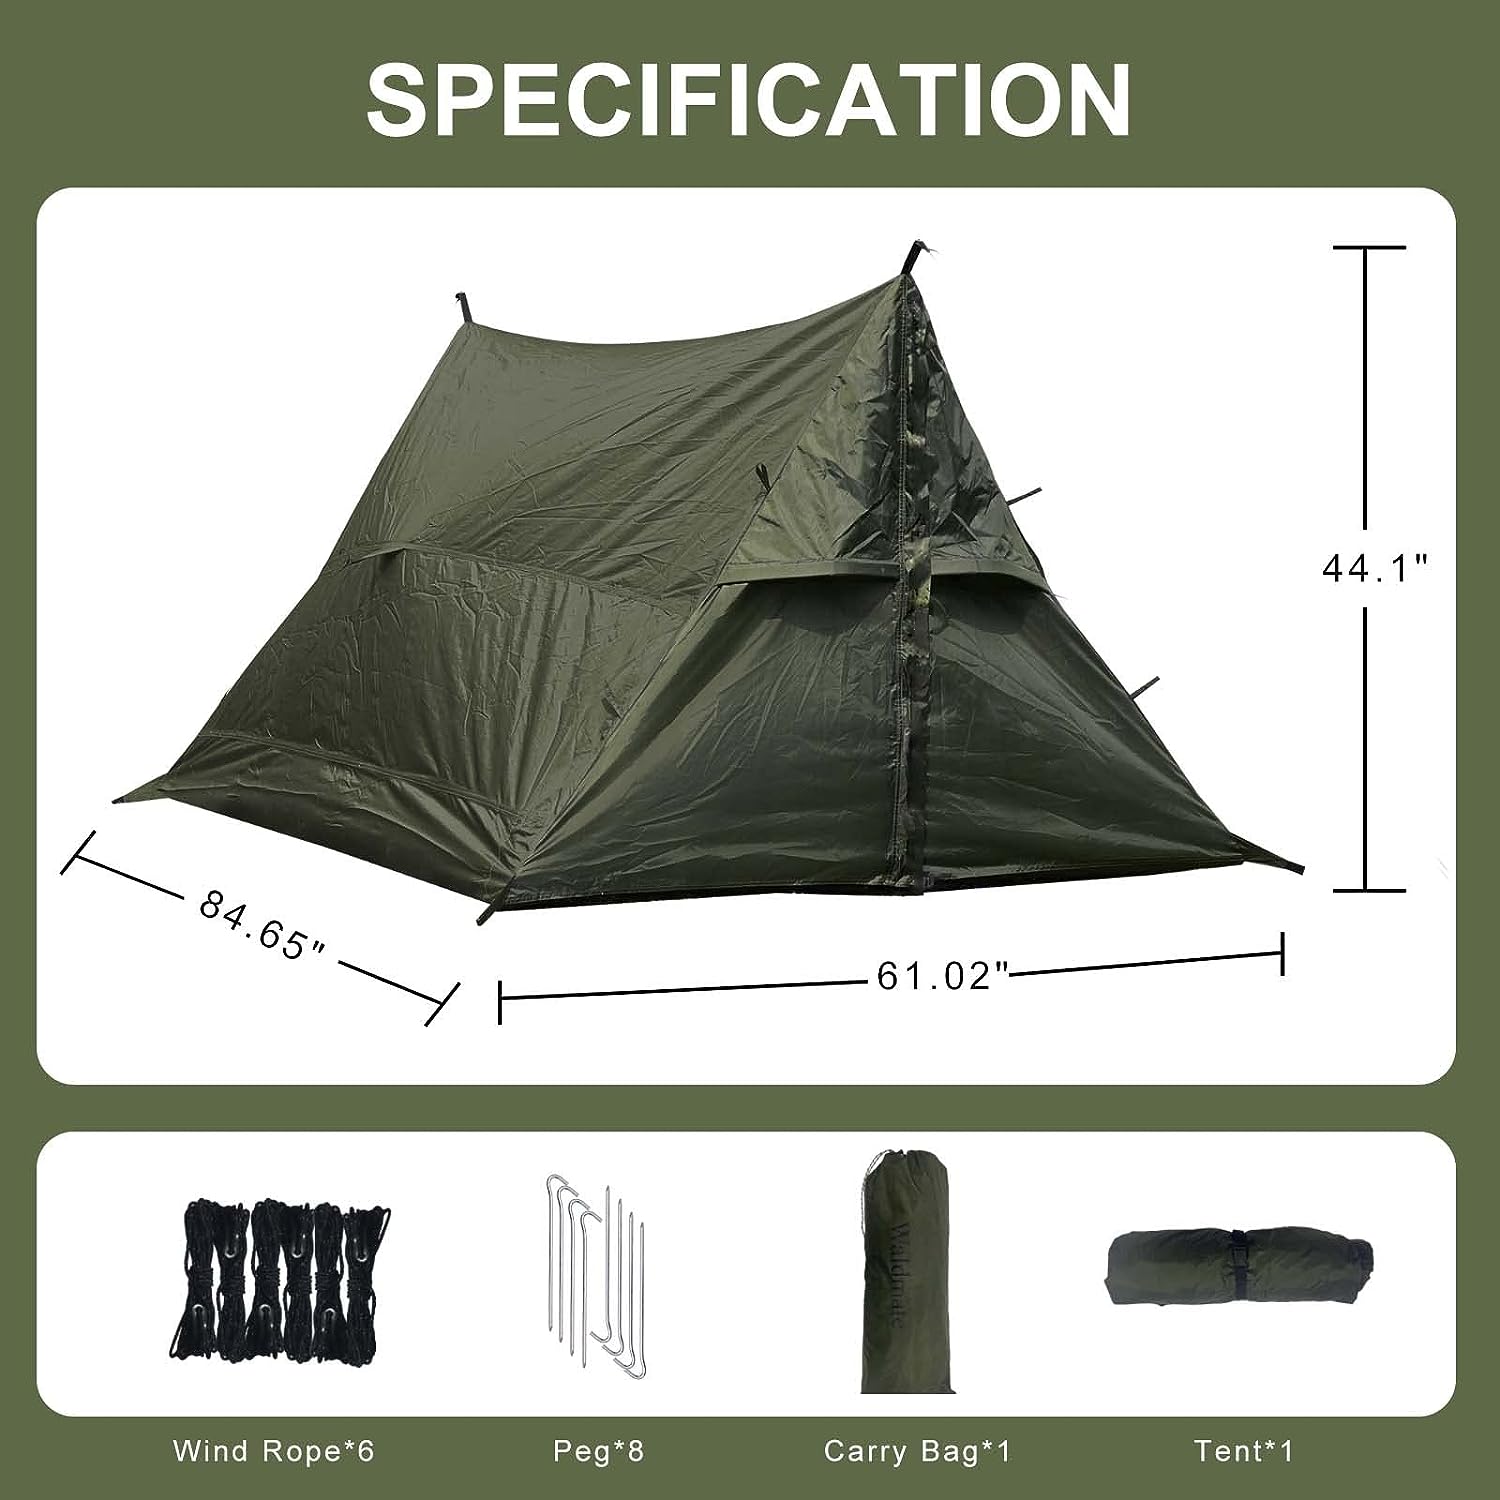 waldzimmer ridge tent green polyester backpacking tent specs